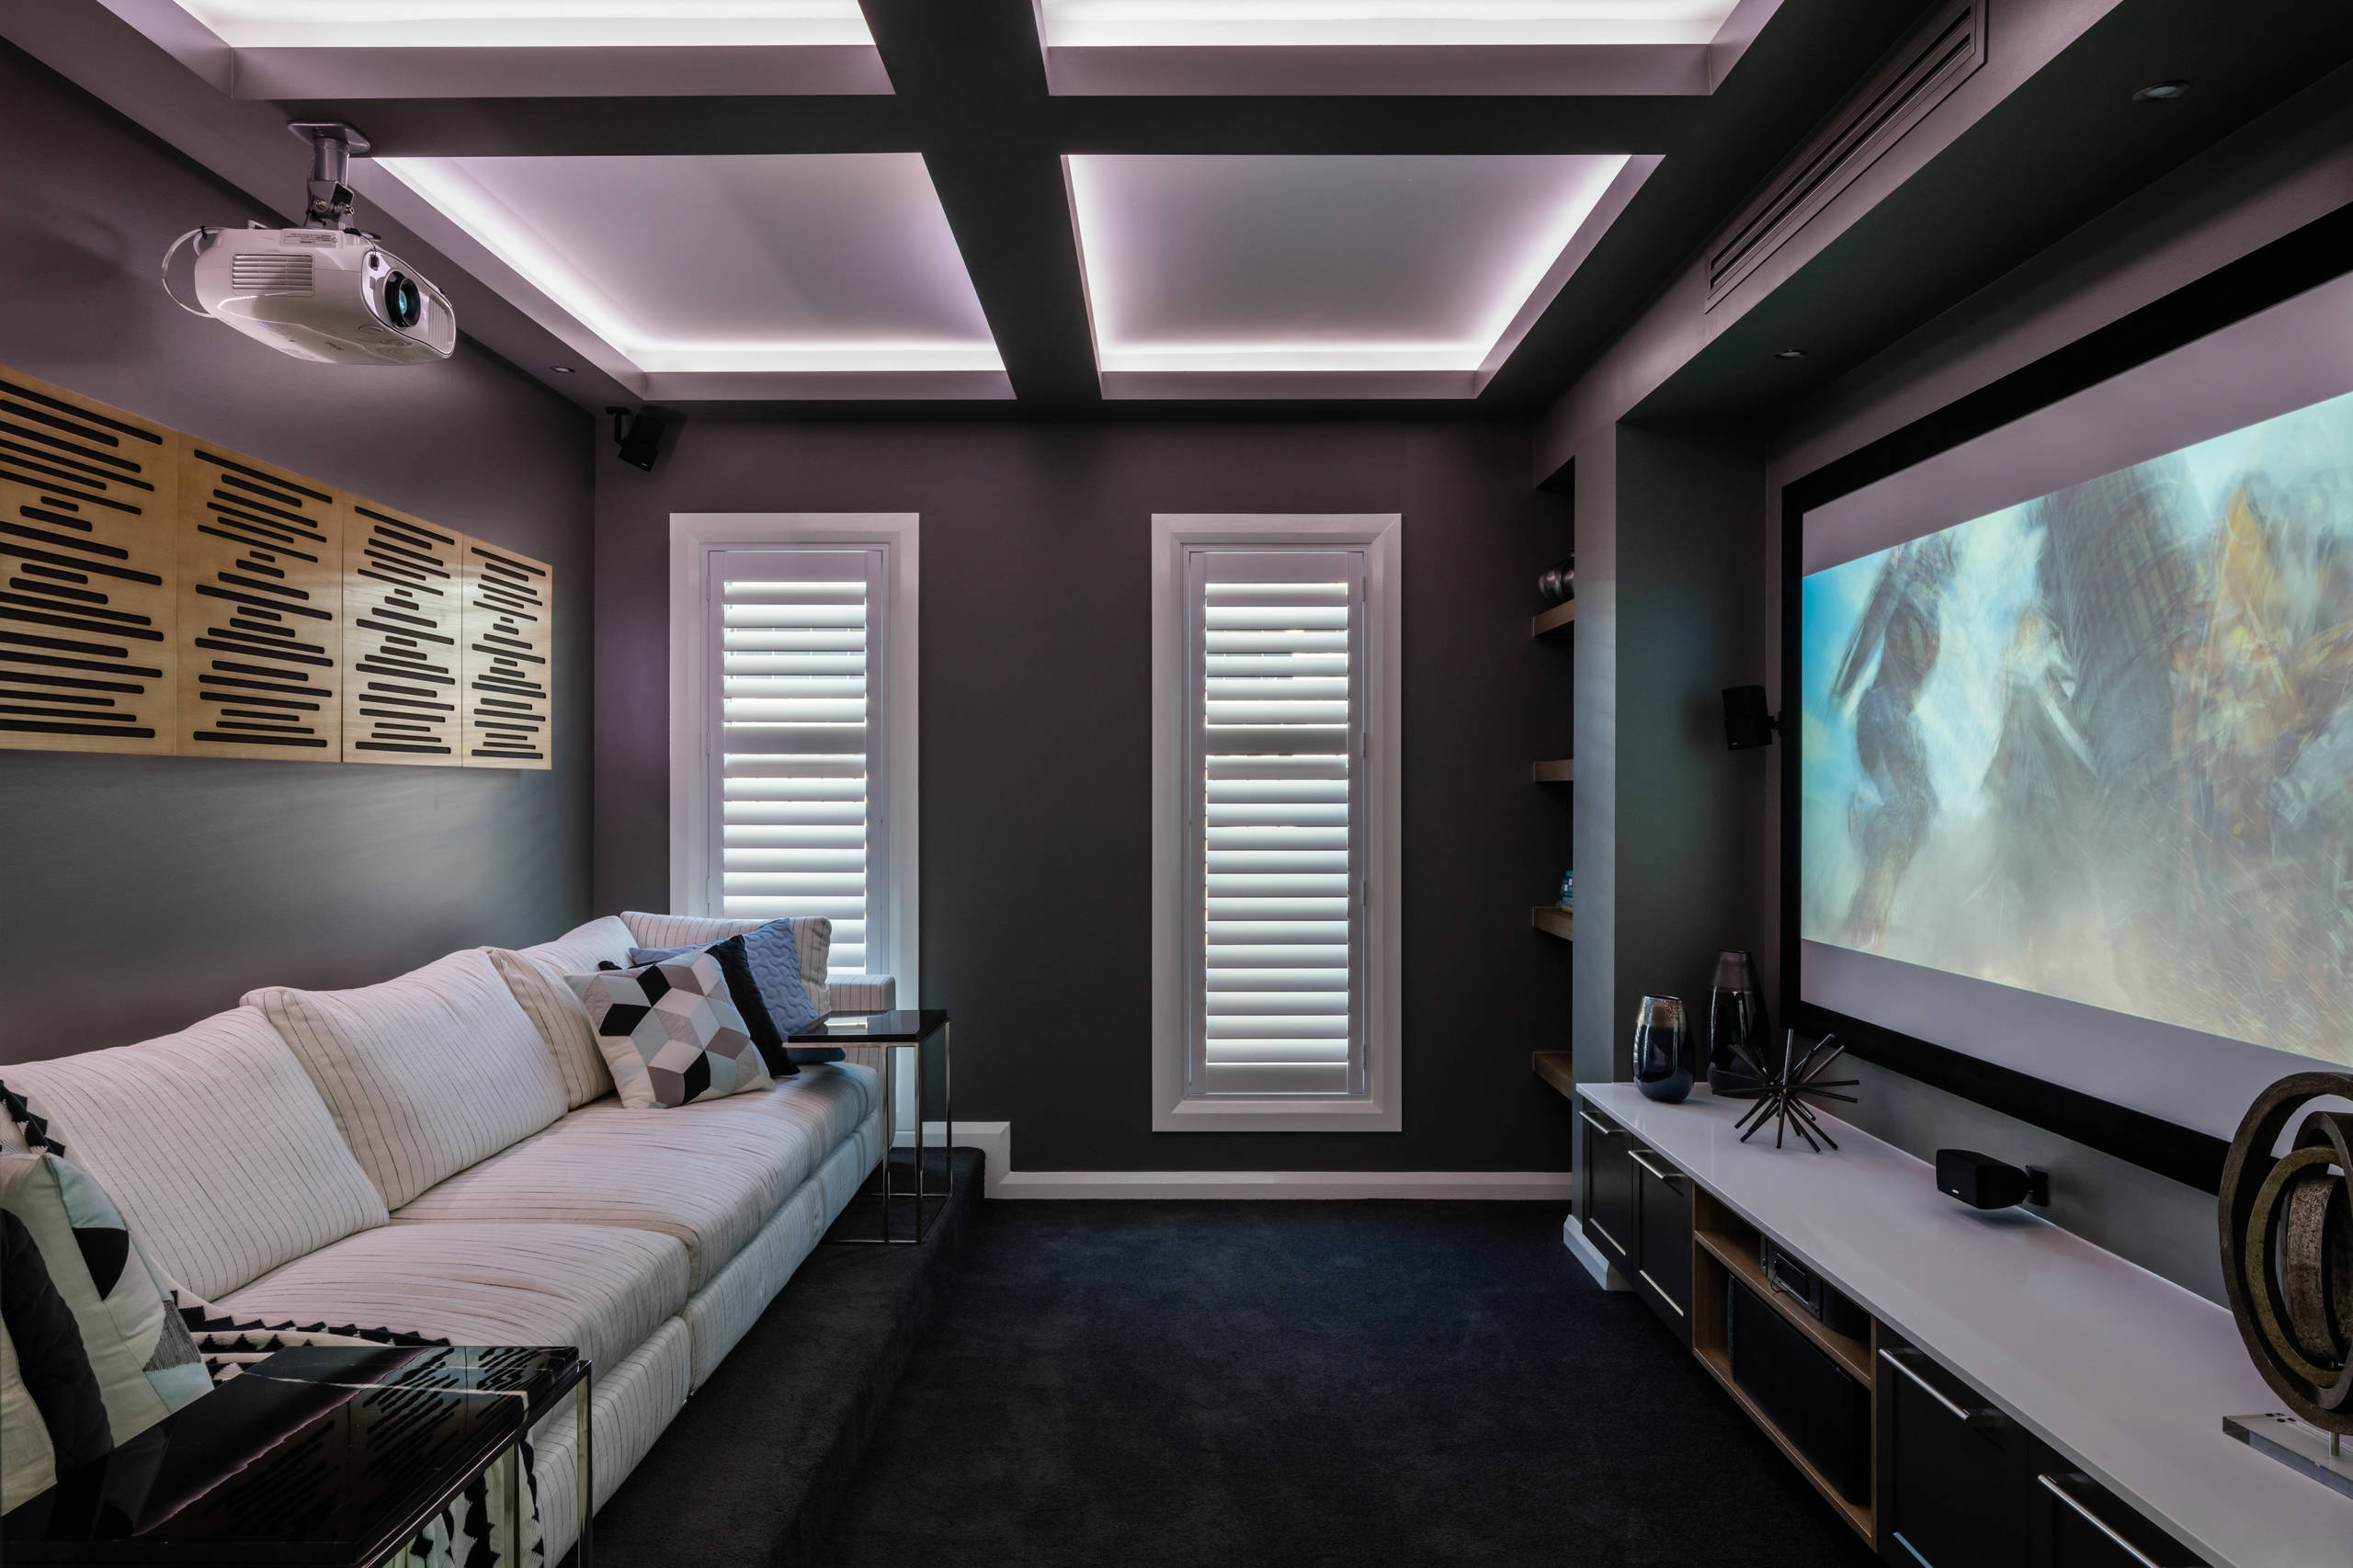 Small Bedroom Projector Setup : Projector in bedroom home cinema